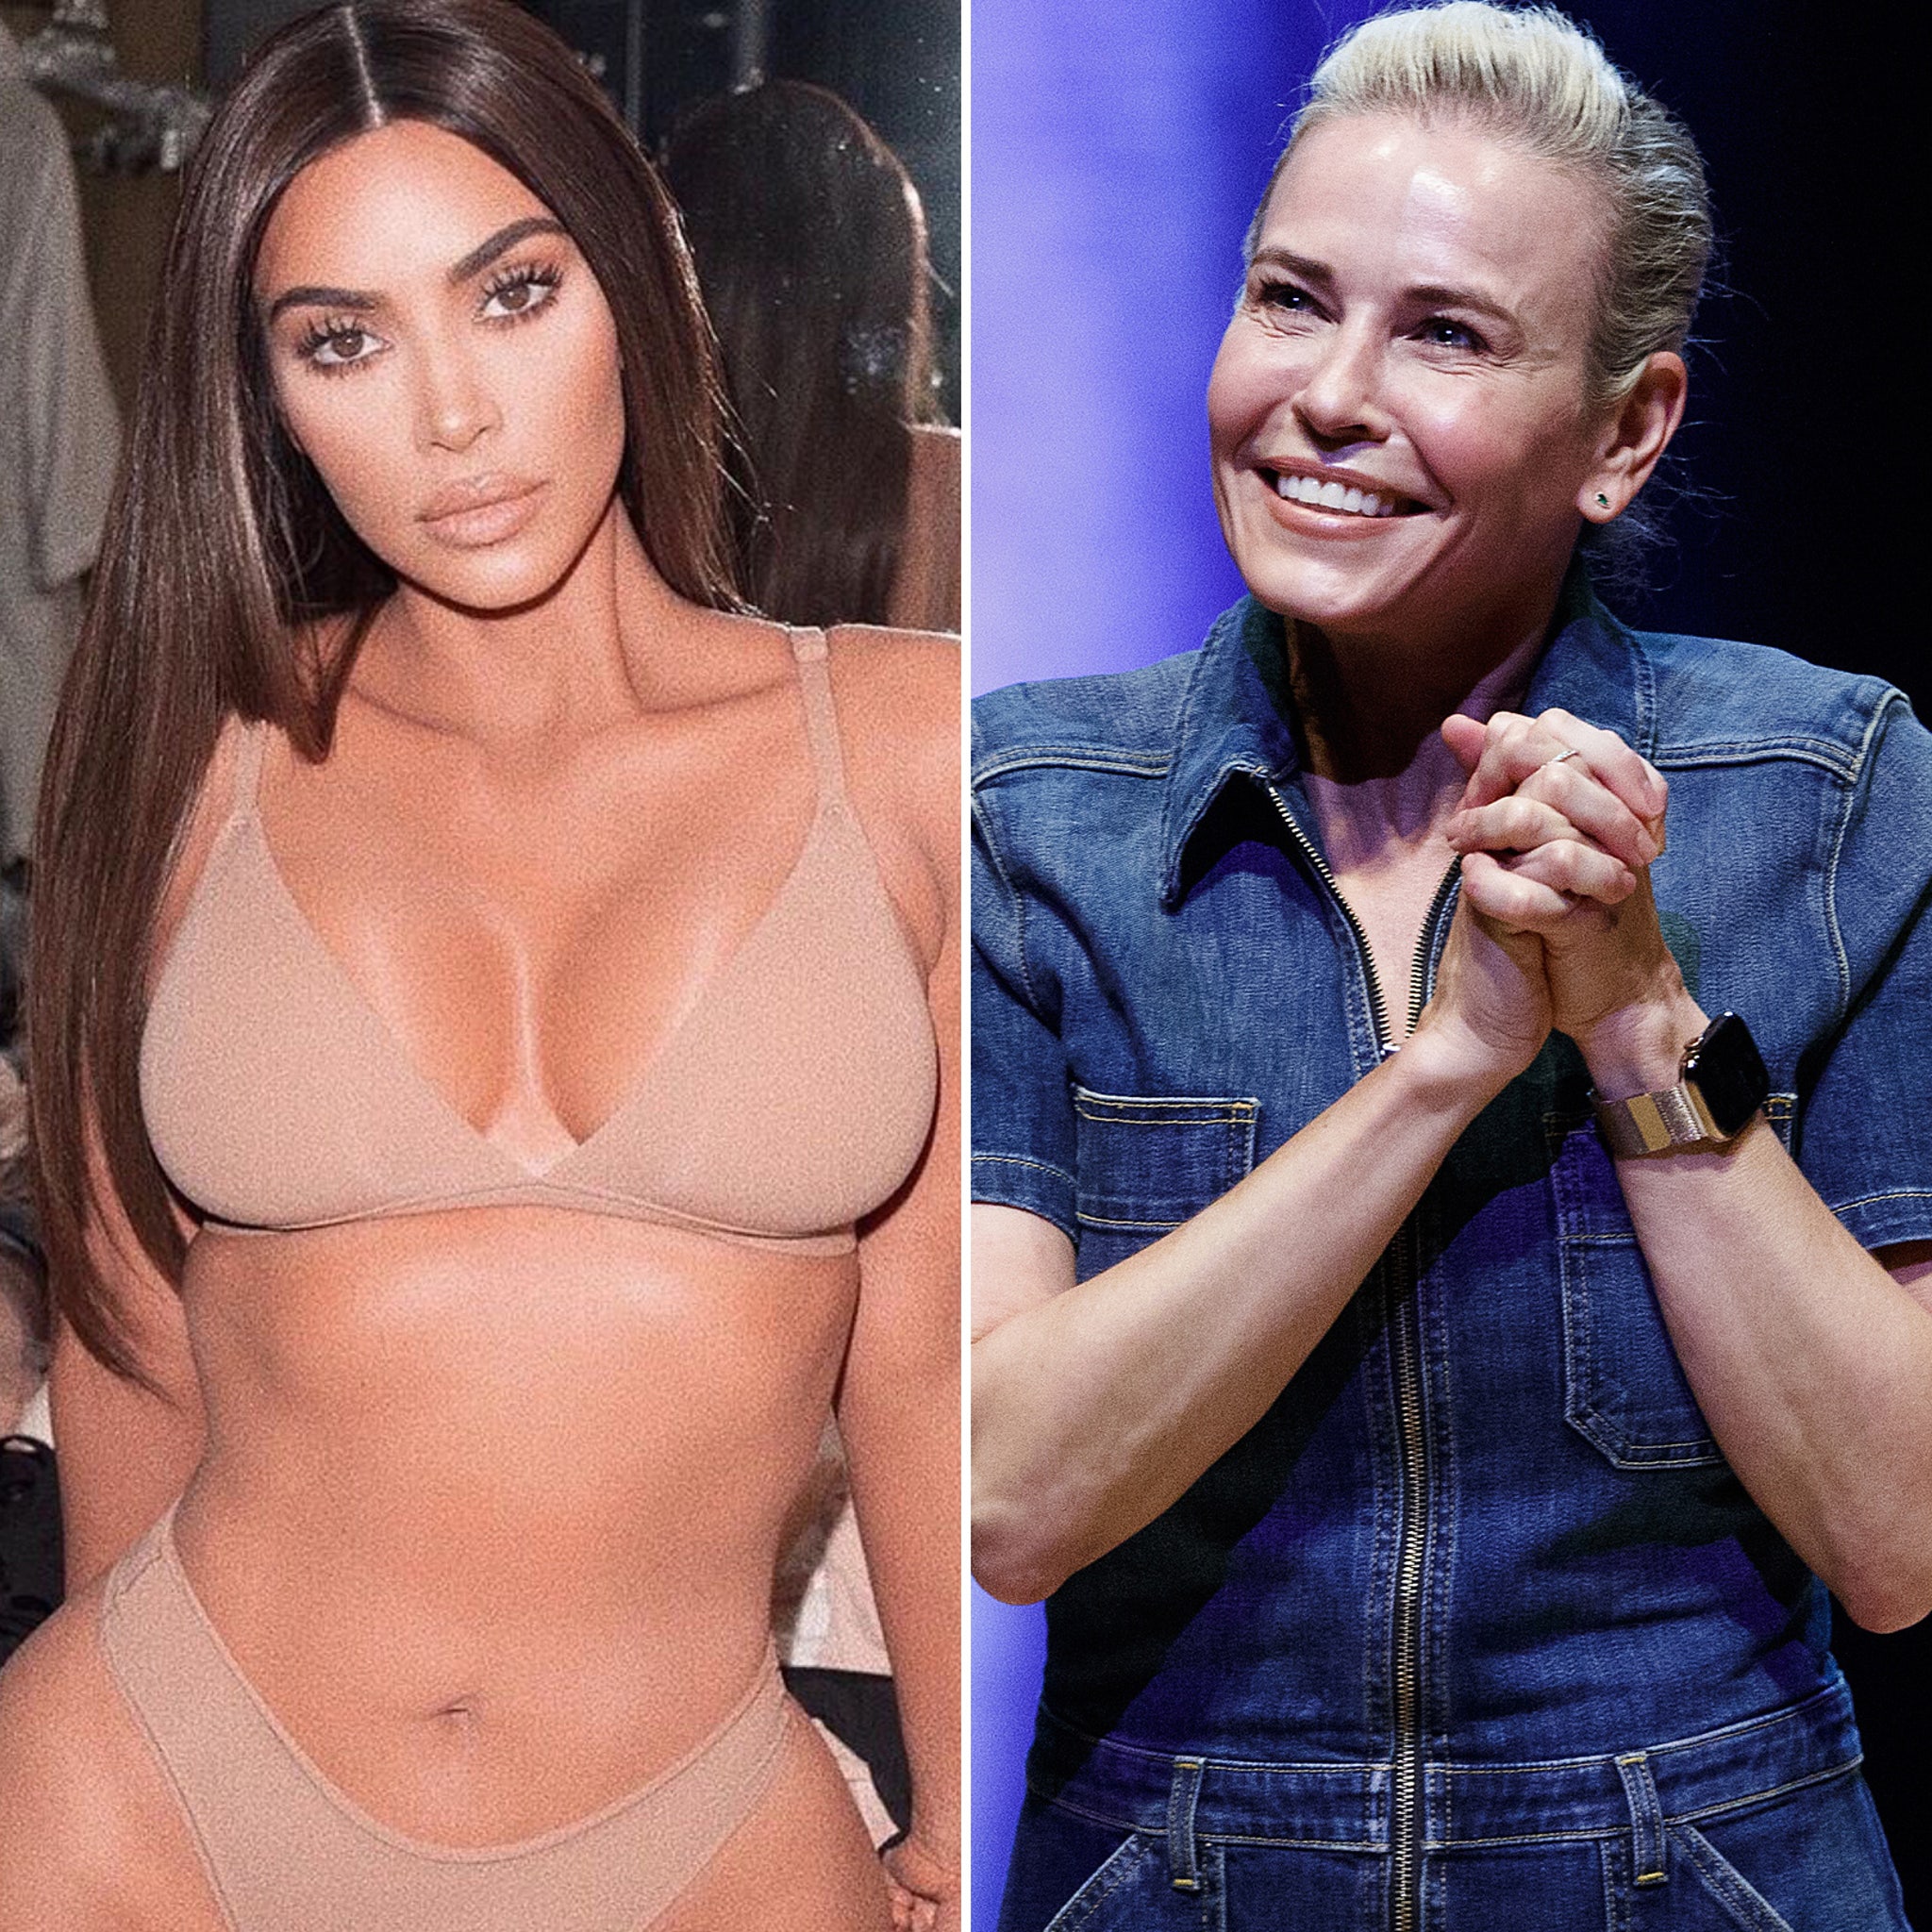 Khloe Kardashian pokes fun at Kim over private parts after